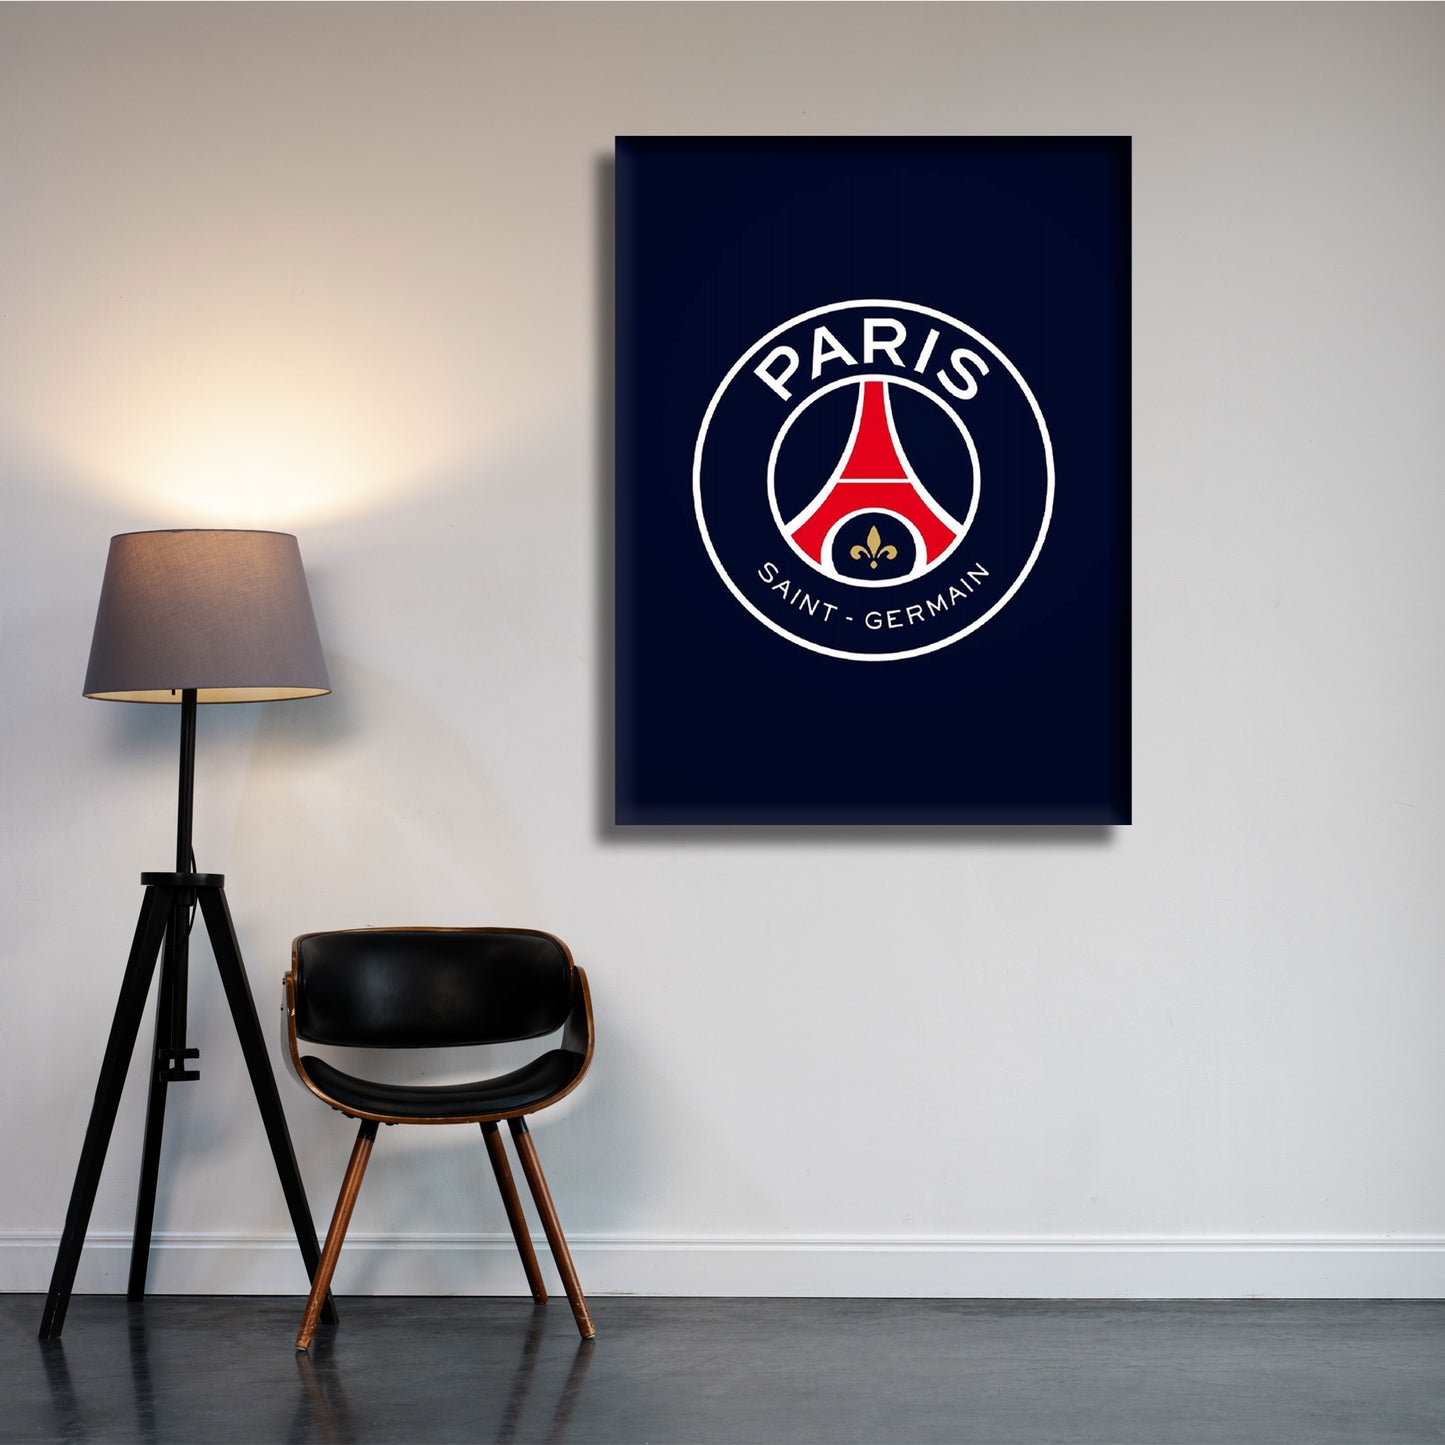 Paris Saint-Germain: Eiffel Tower of Football Excellence - The Iconic Emblem of Parisian Football Glory - S07E03